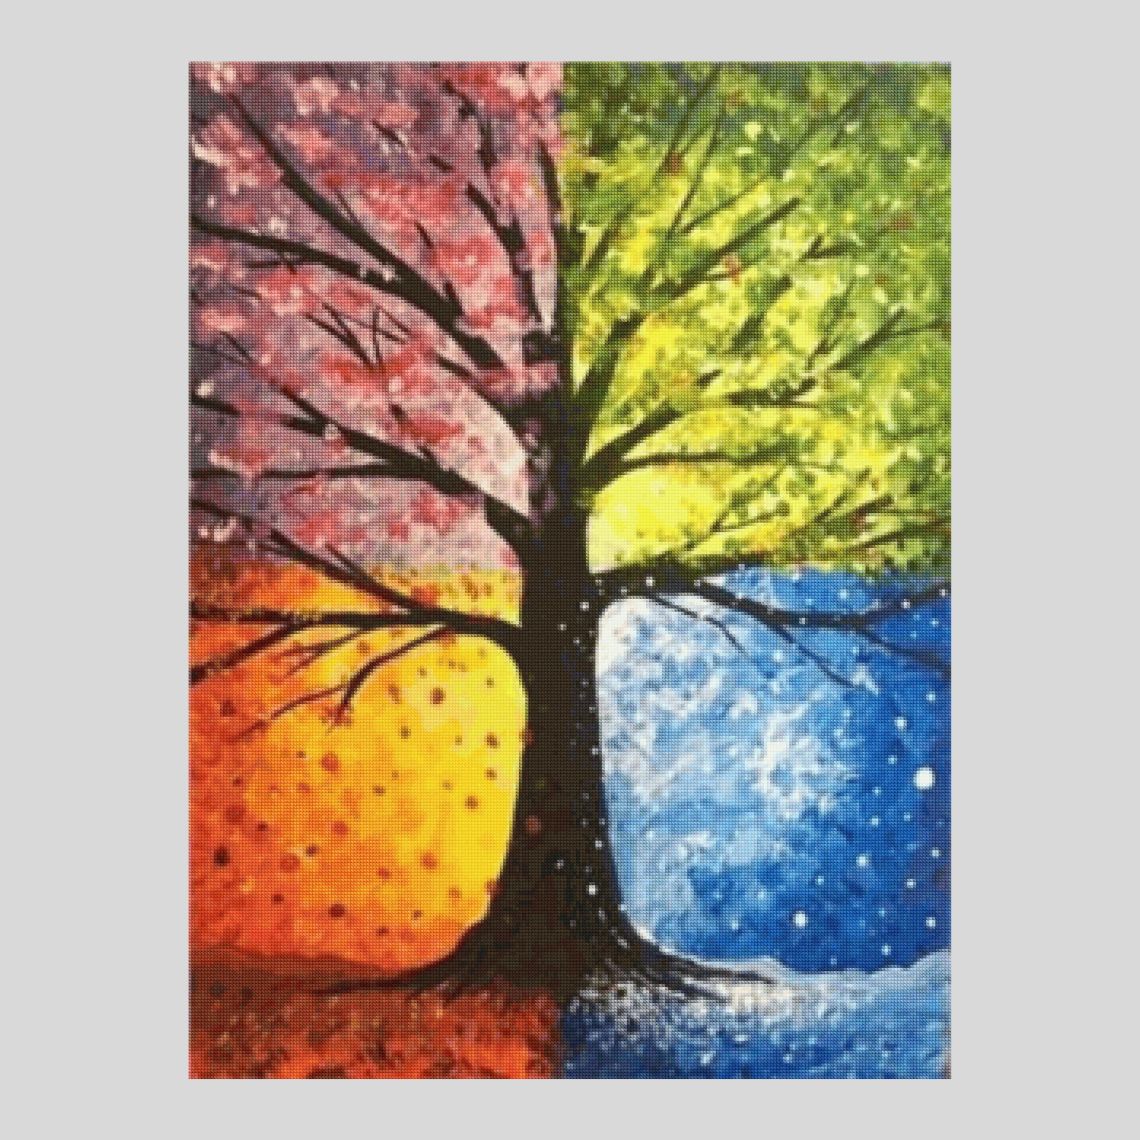 Tree Of Life The Different Seasons Art - Diamond Painting 